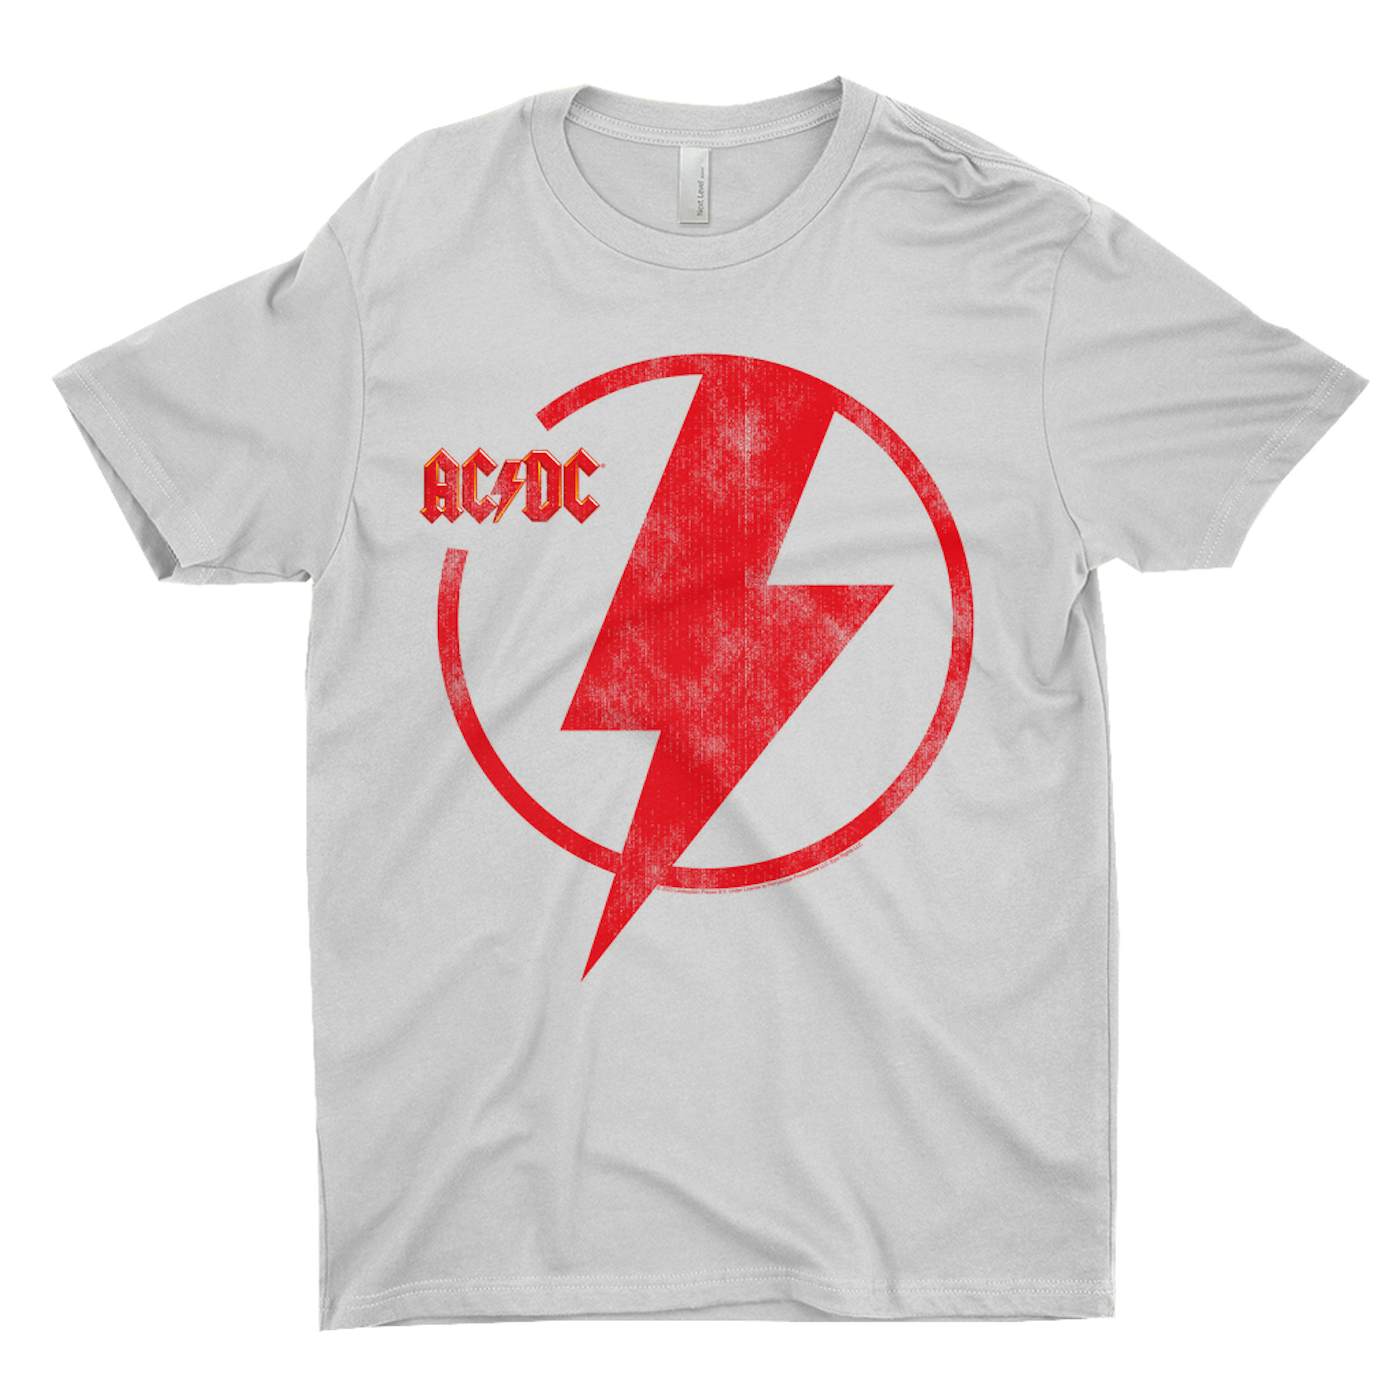 ACDC T-Shirt | AC/DC Logo Lightning Bolt Red Distressed ACDC Shirt